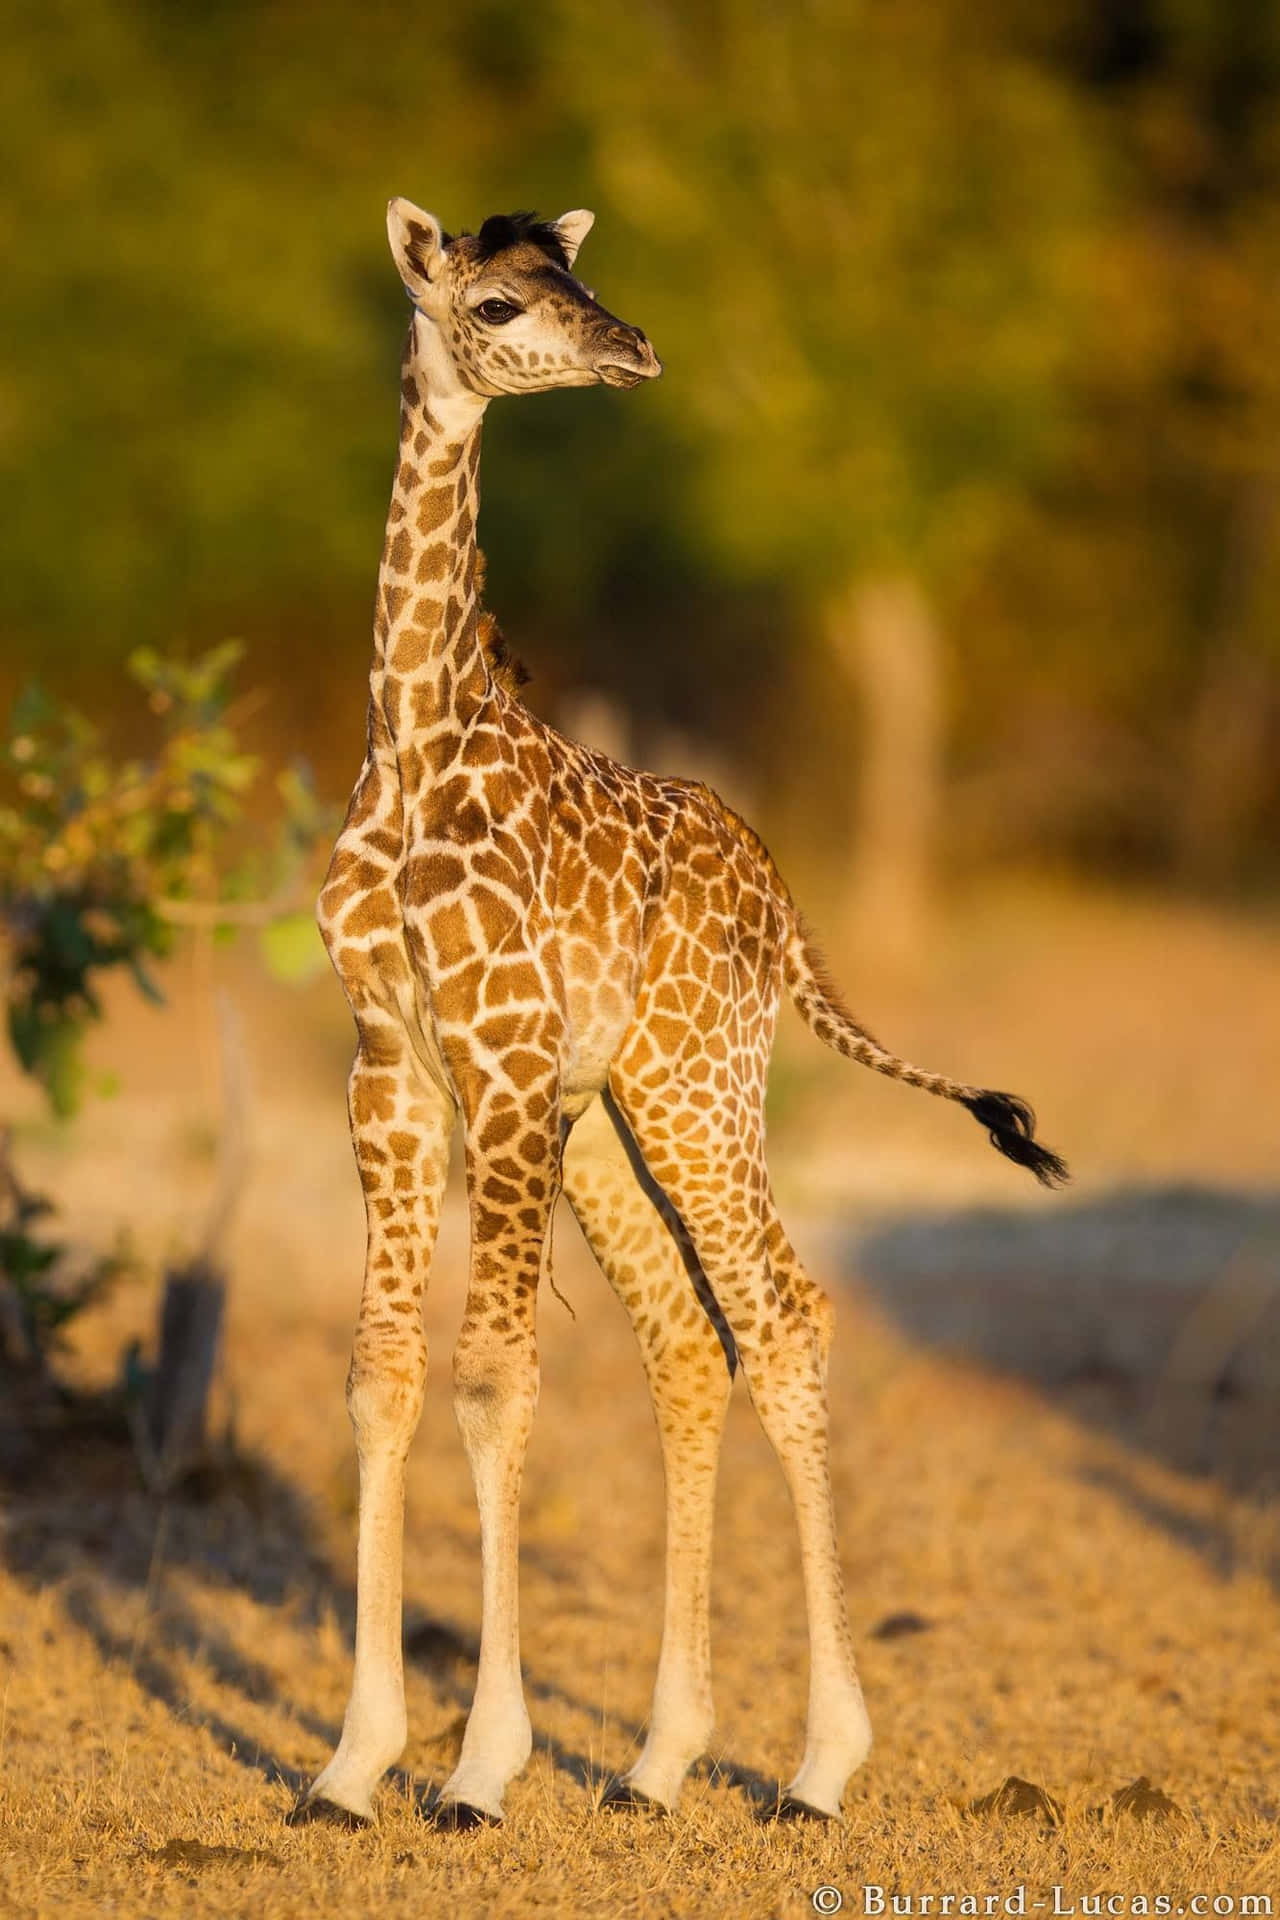 A Baby Giraffe Standing In The Dirt